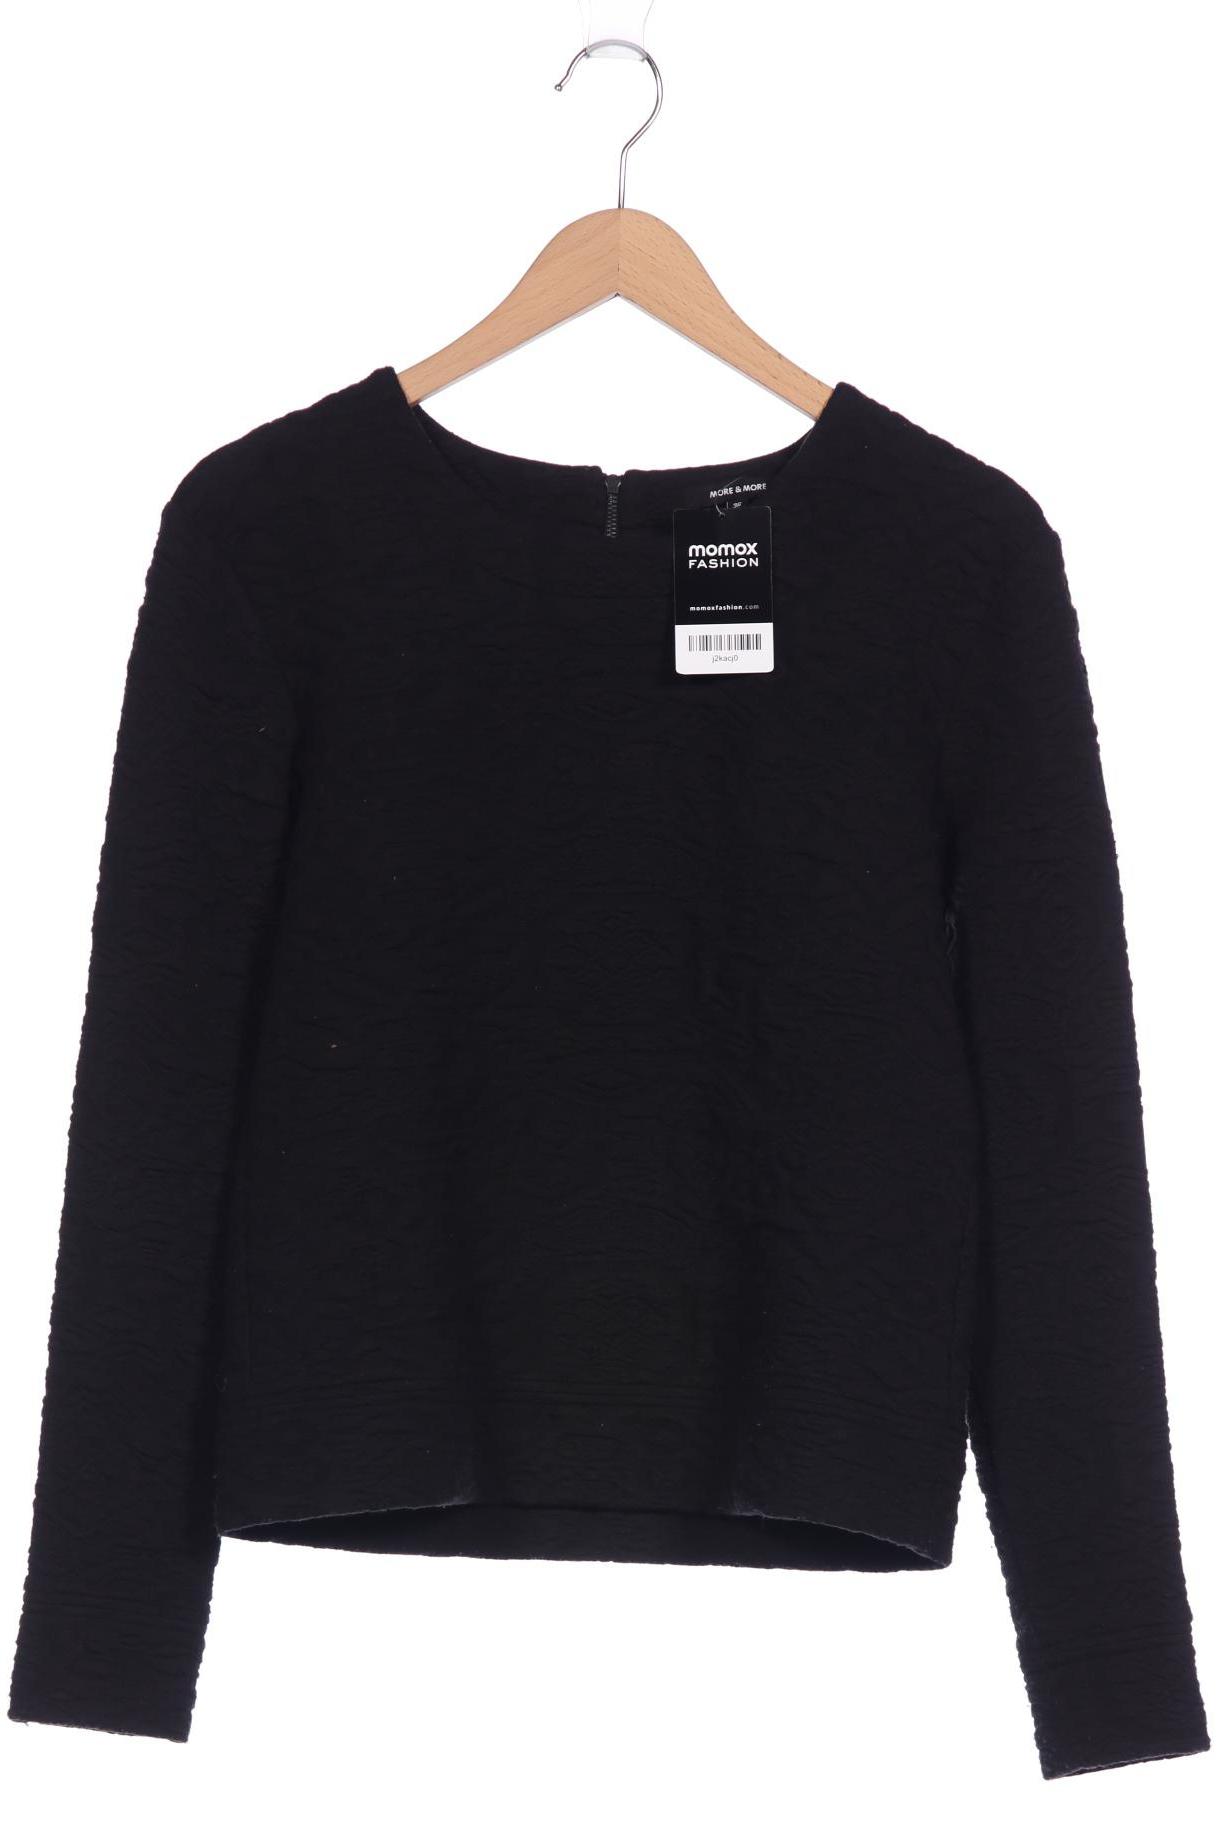 More & More Damen Pullover, schwarz von MORE & MORE